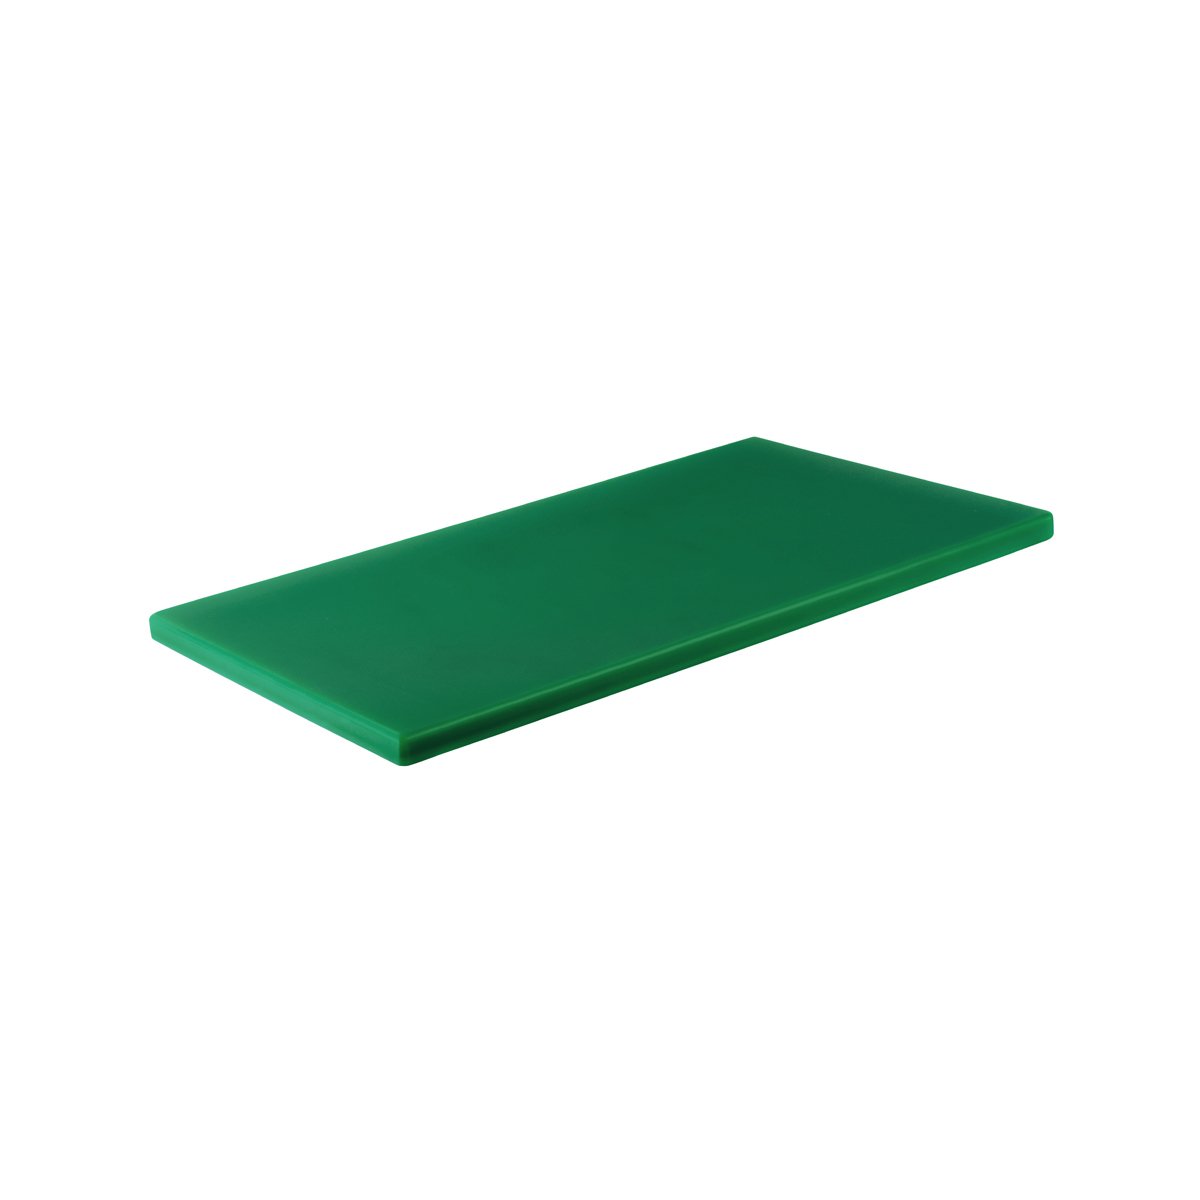 04387 Chef Inox Cutting Board Polyethylene Green Gastronorm 1/1 530x325x20mm Tomkin Australia Hospitality Supplies